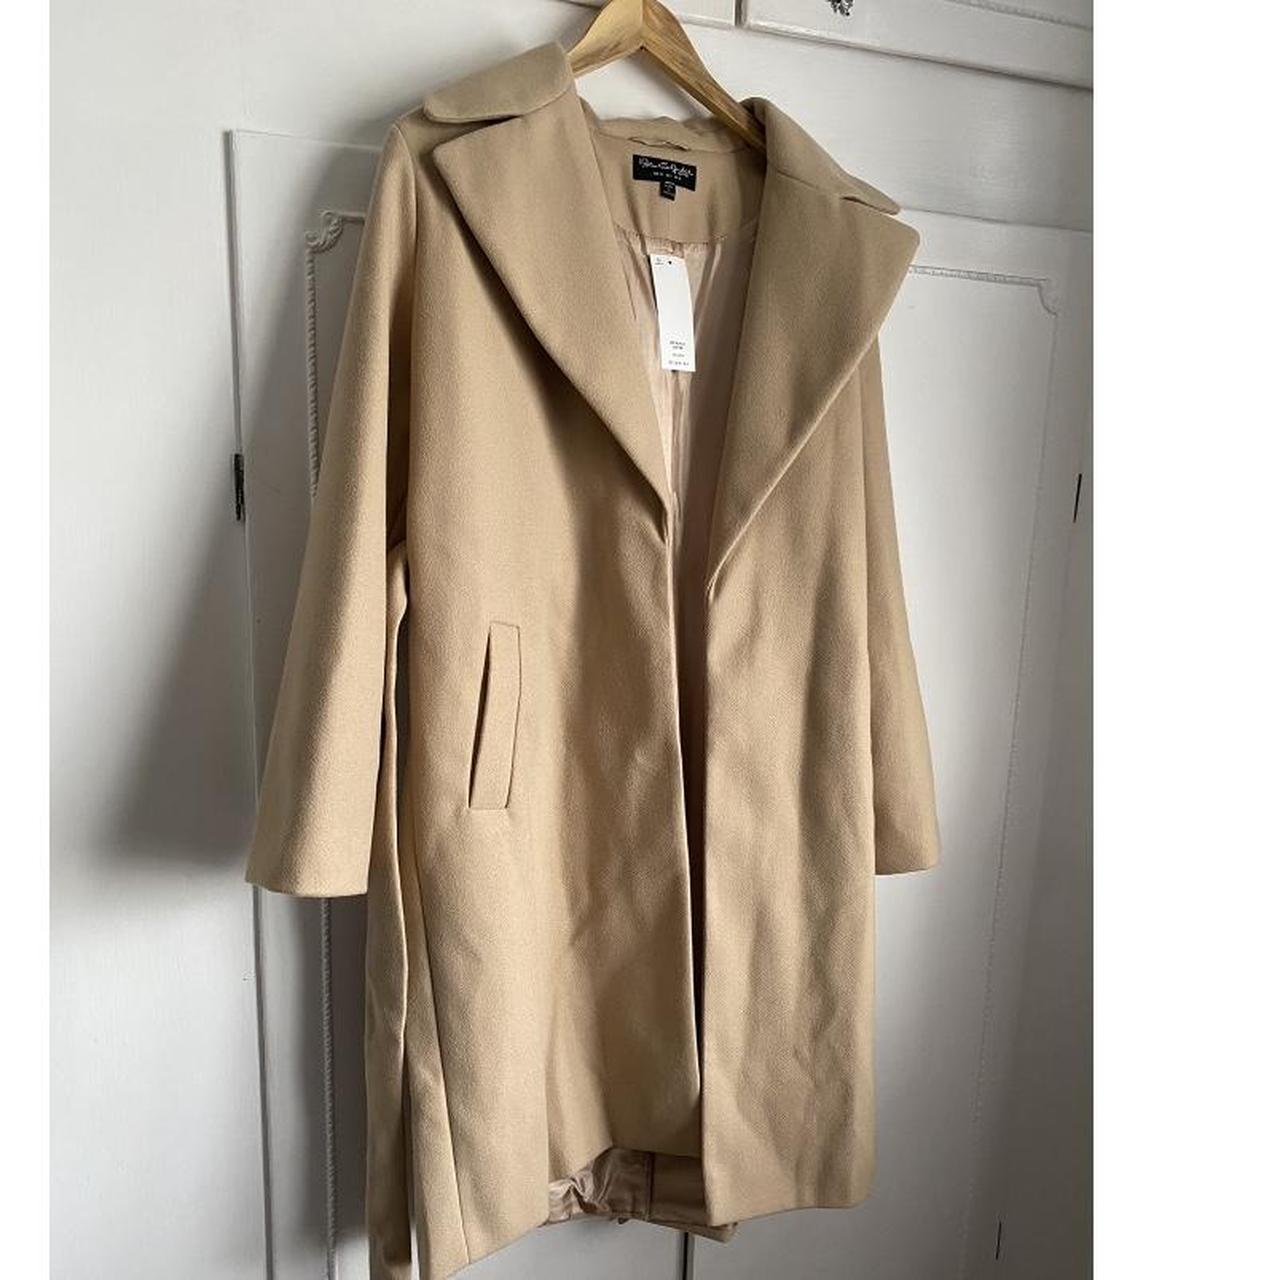 Miss selfridge duster coat Size 10 Stunning coat... - Depop